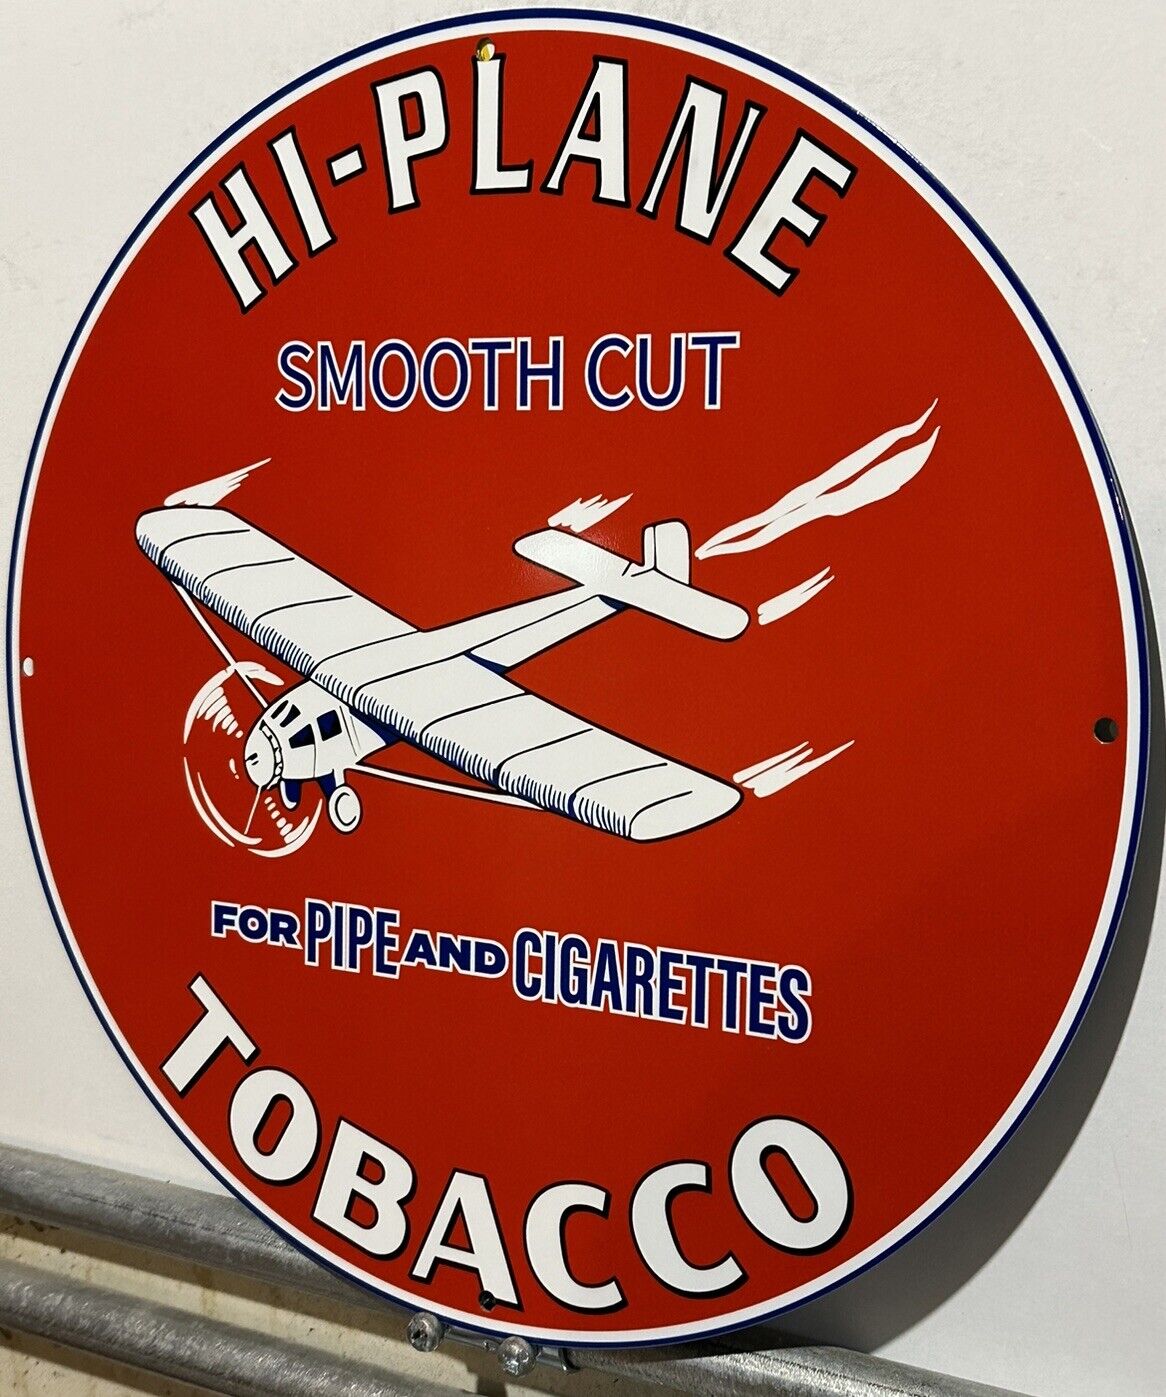 Vintage Style Premium Hi-Plane Tobacco Steel Metal Quality Sign